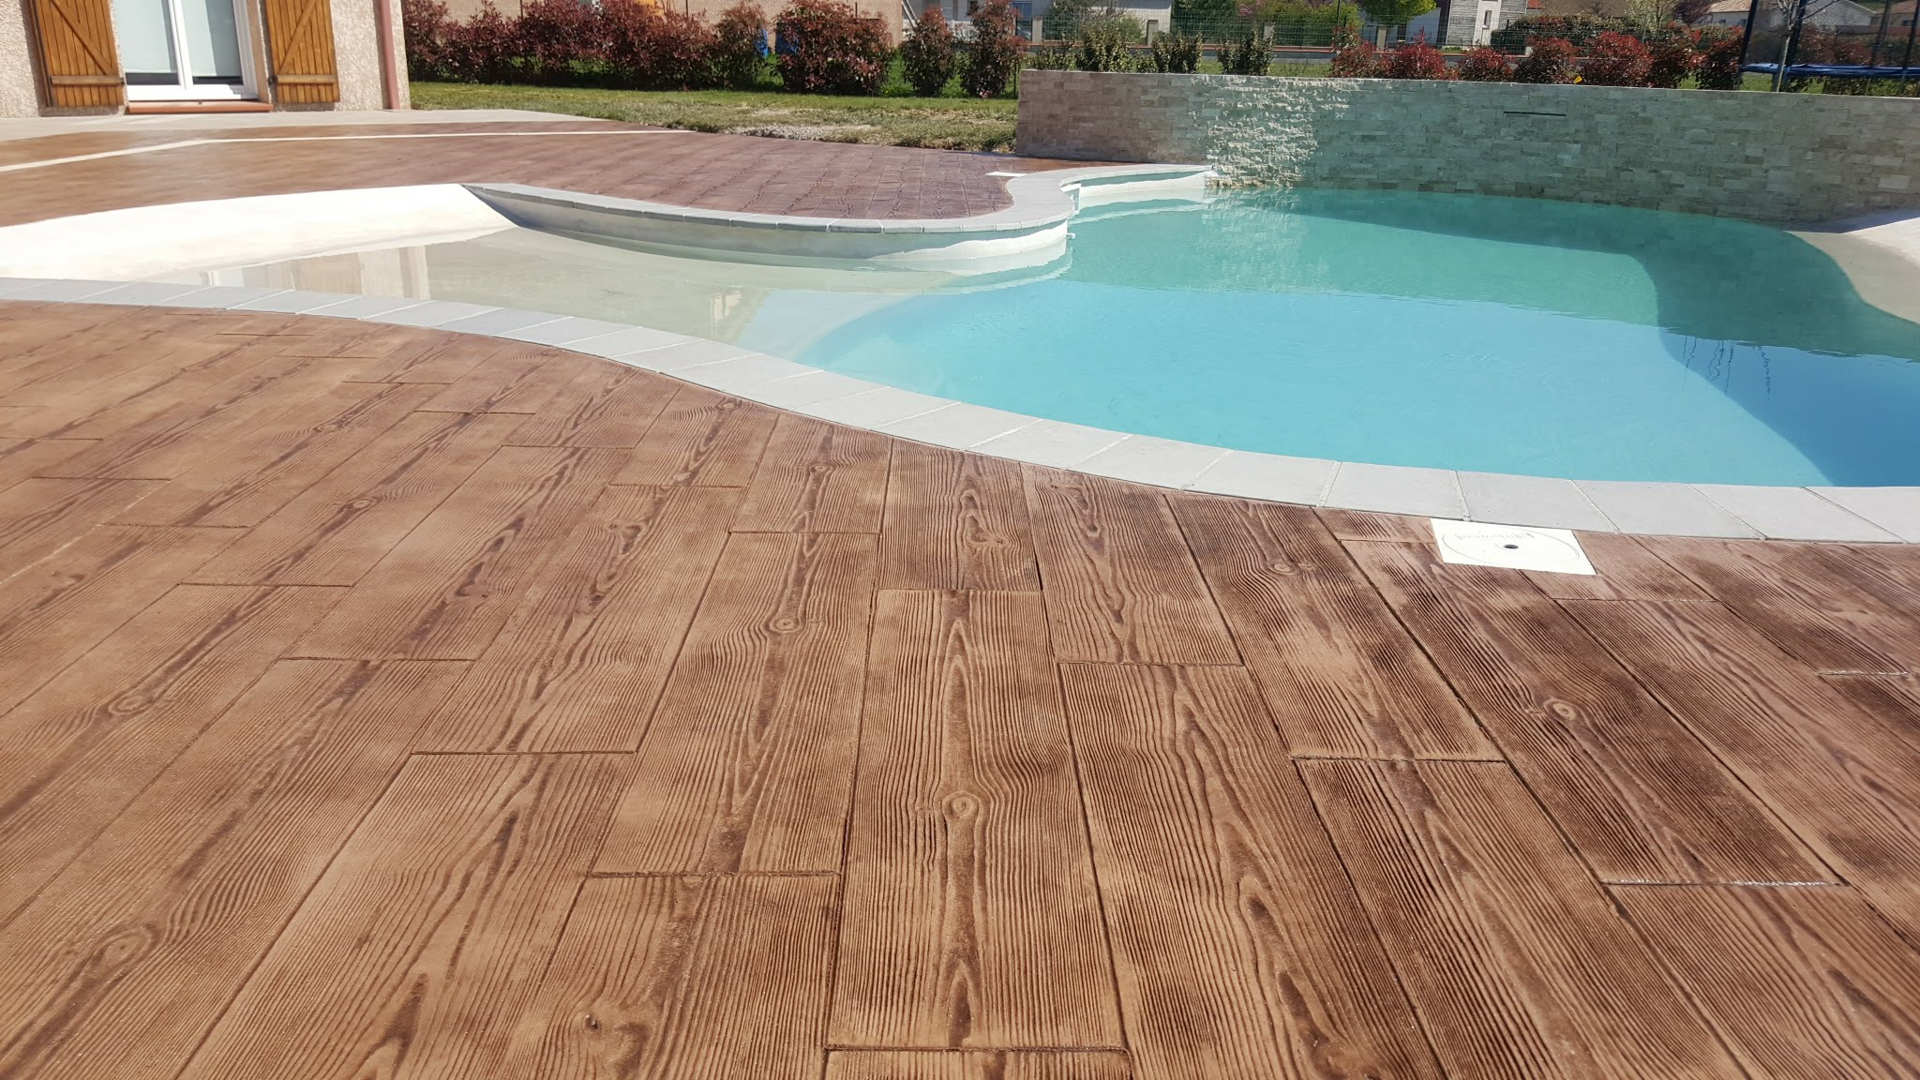  pavimento hormigón impreso madera alrededor piscina